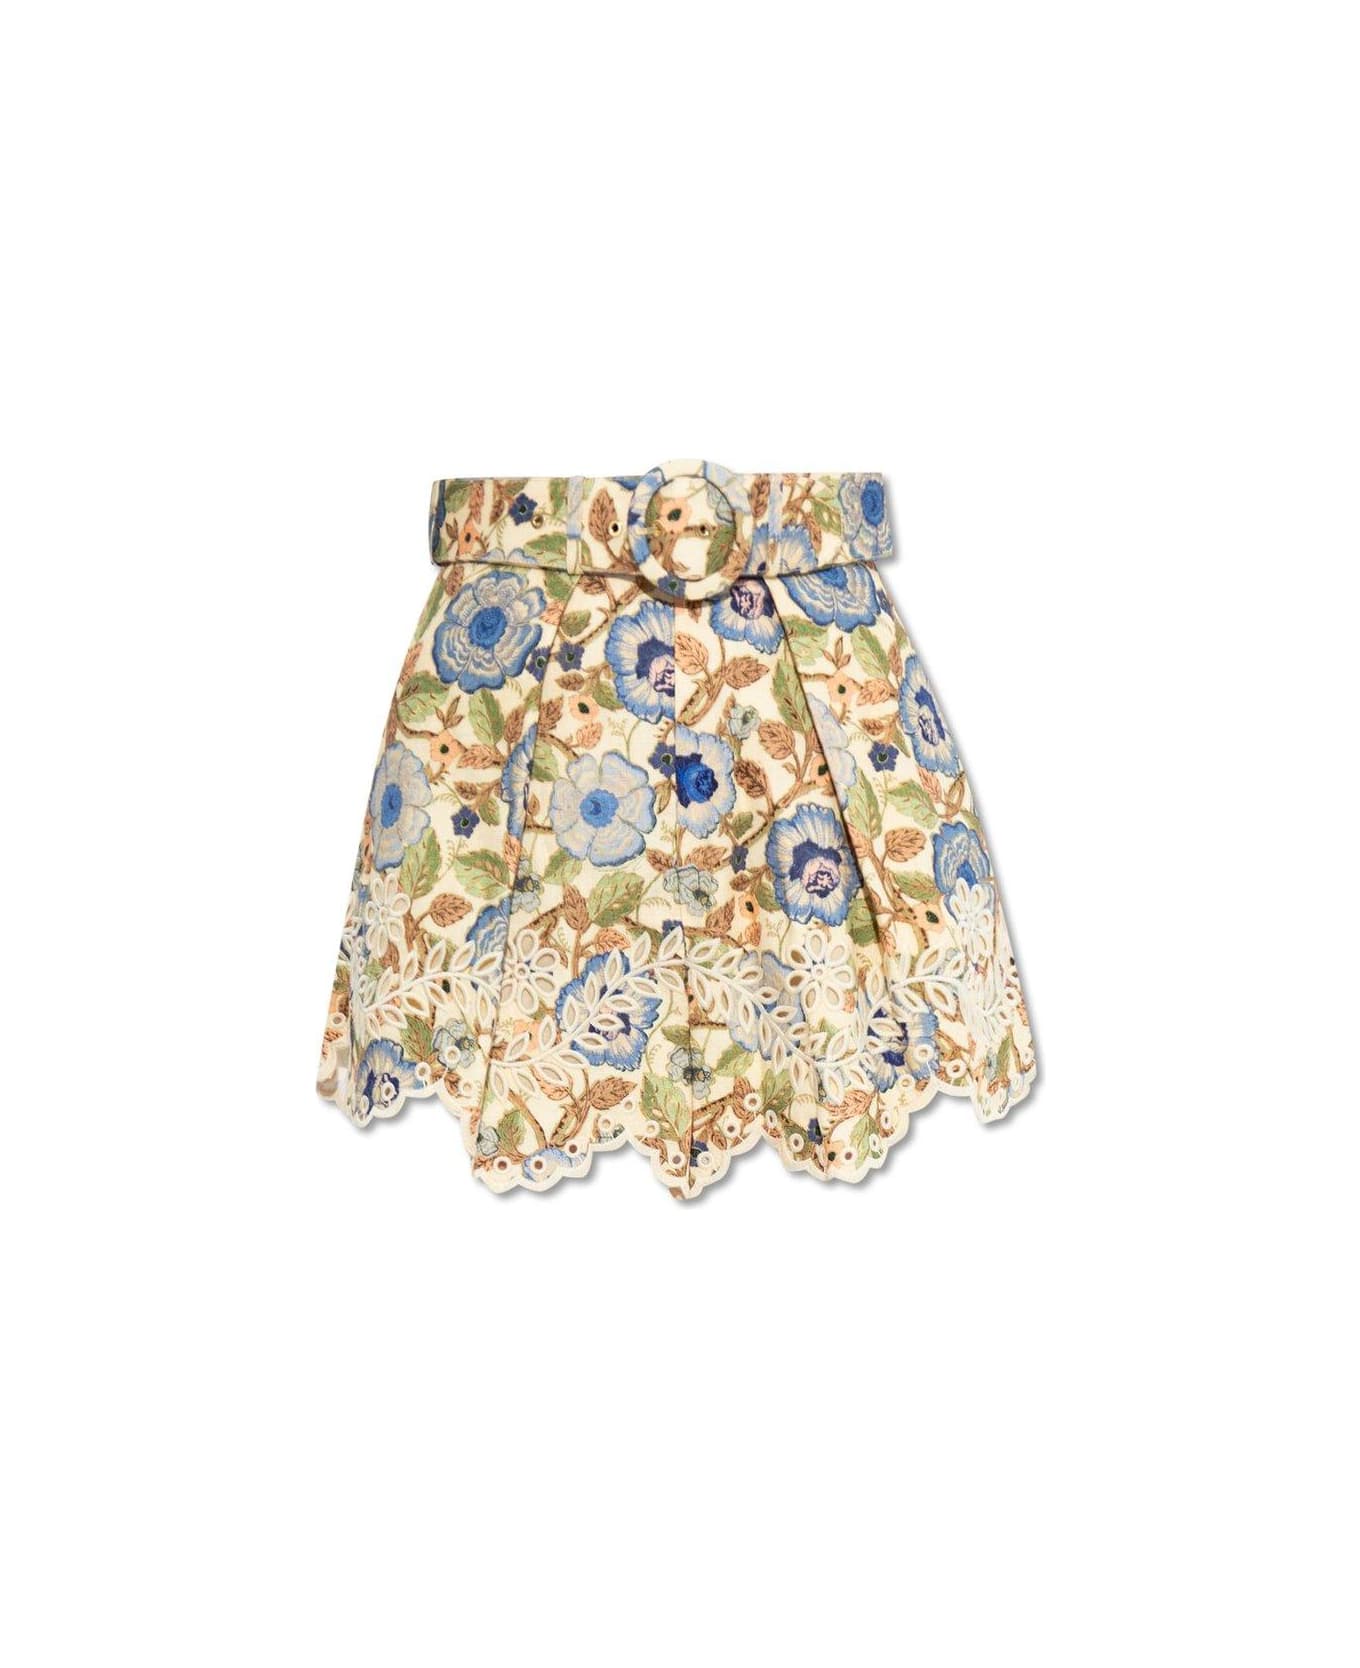 Zimmermann Junie Embroidered Shorts - Ivobf Ivory Blue Floral